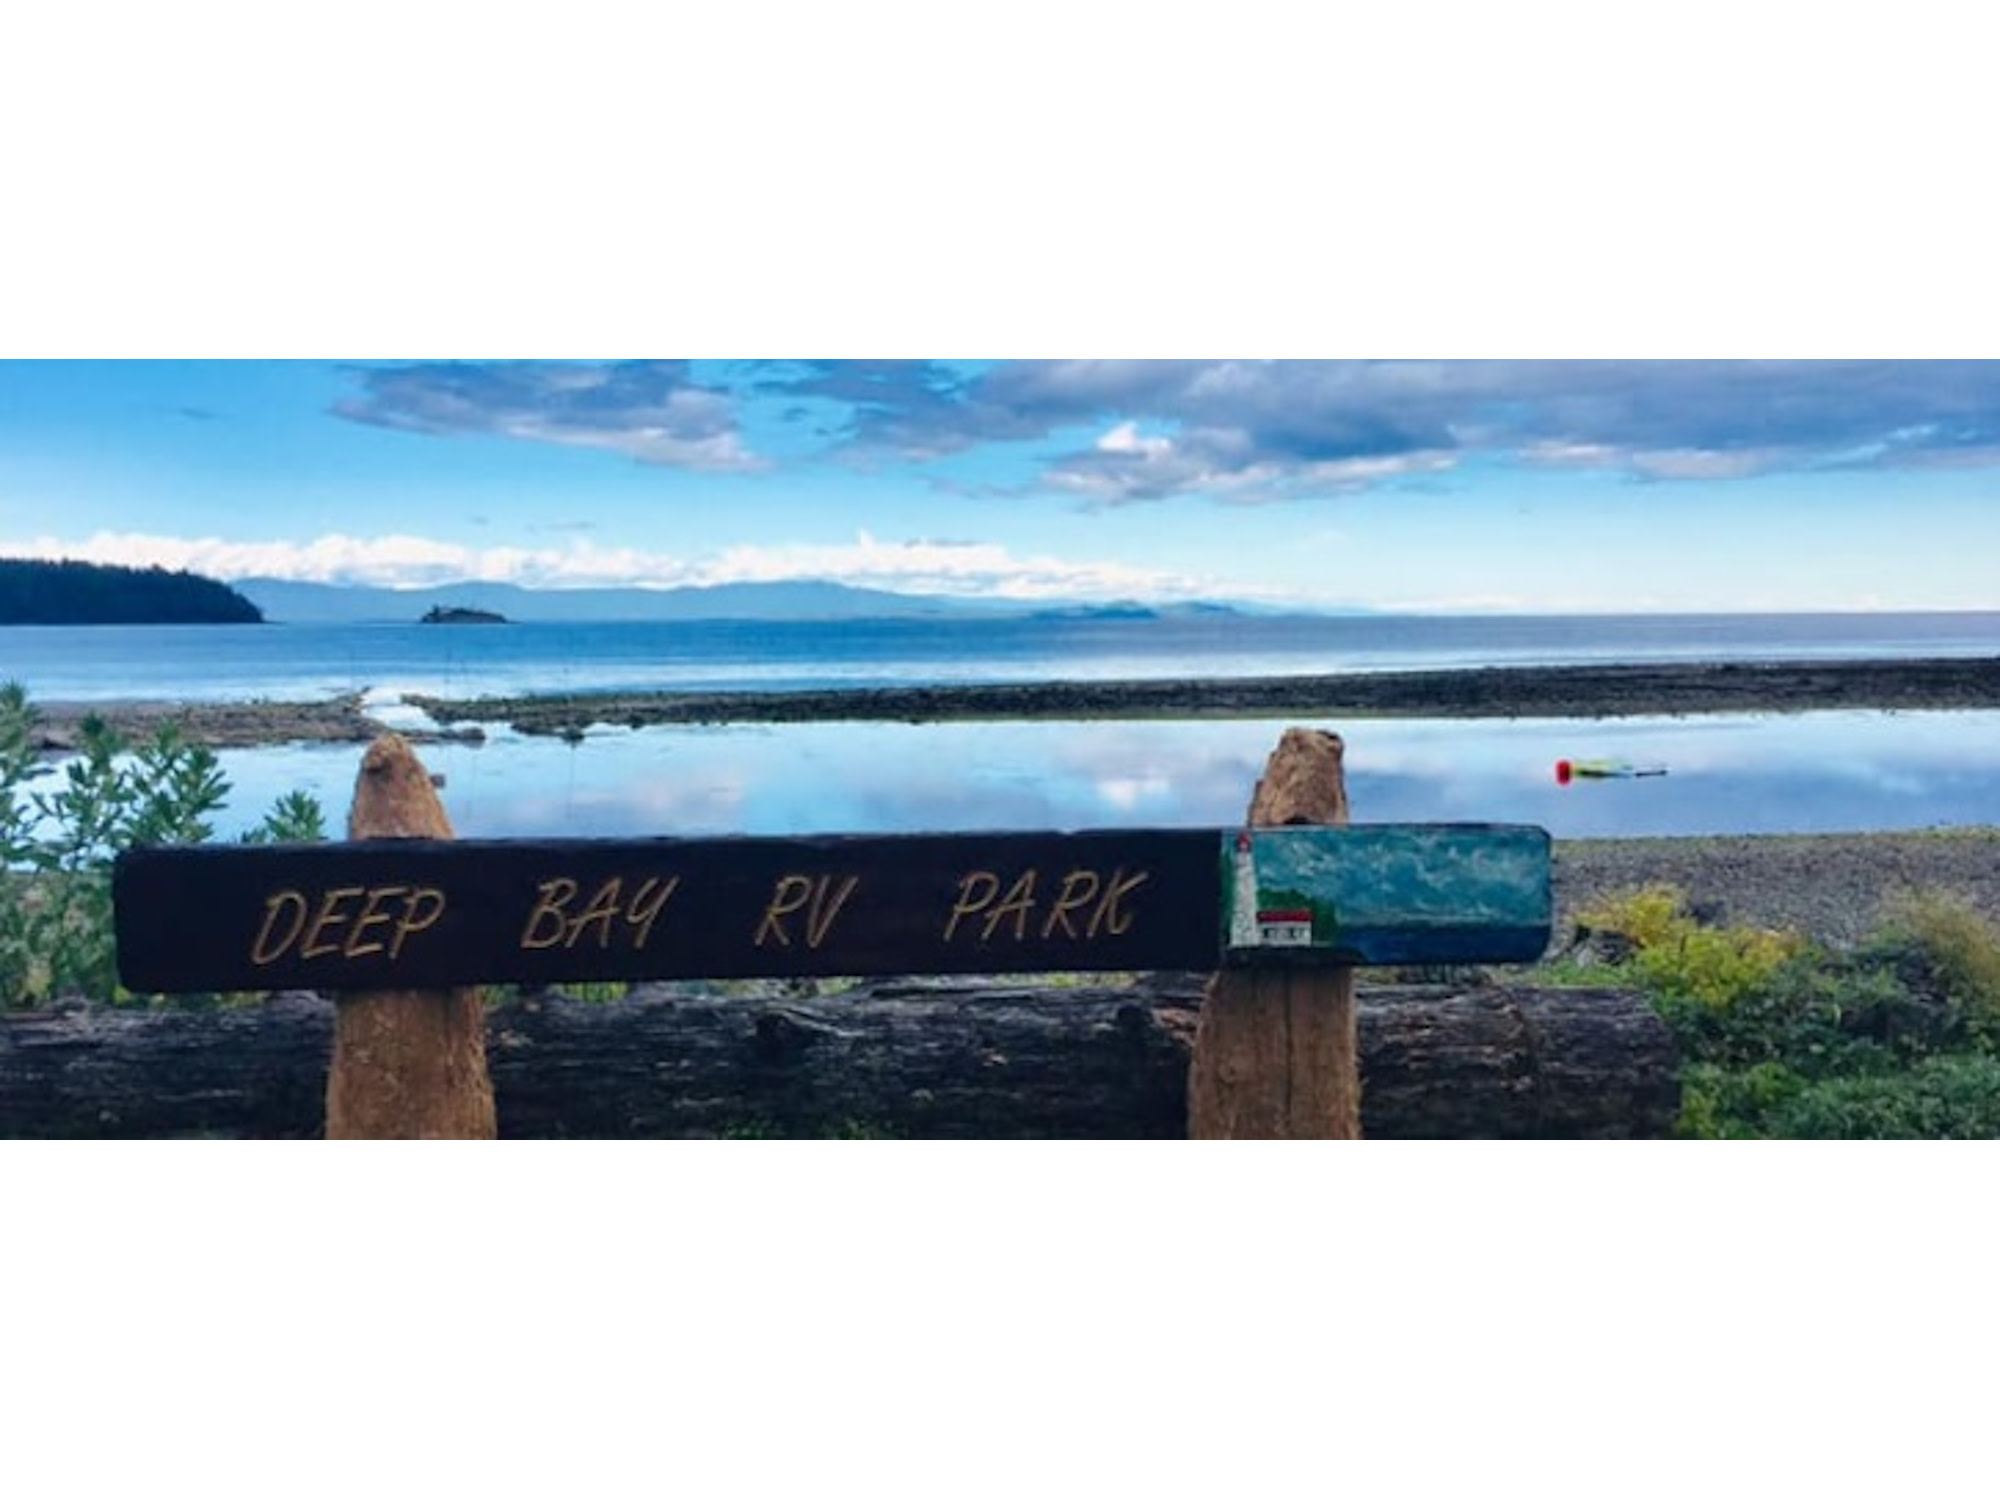 Deep Bay Signage